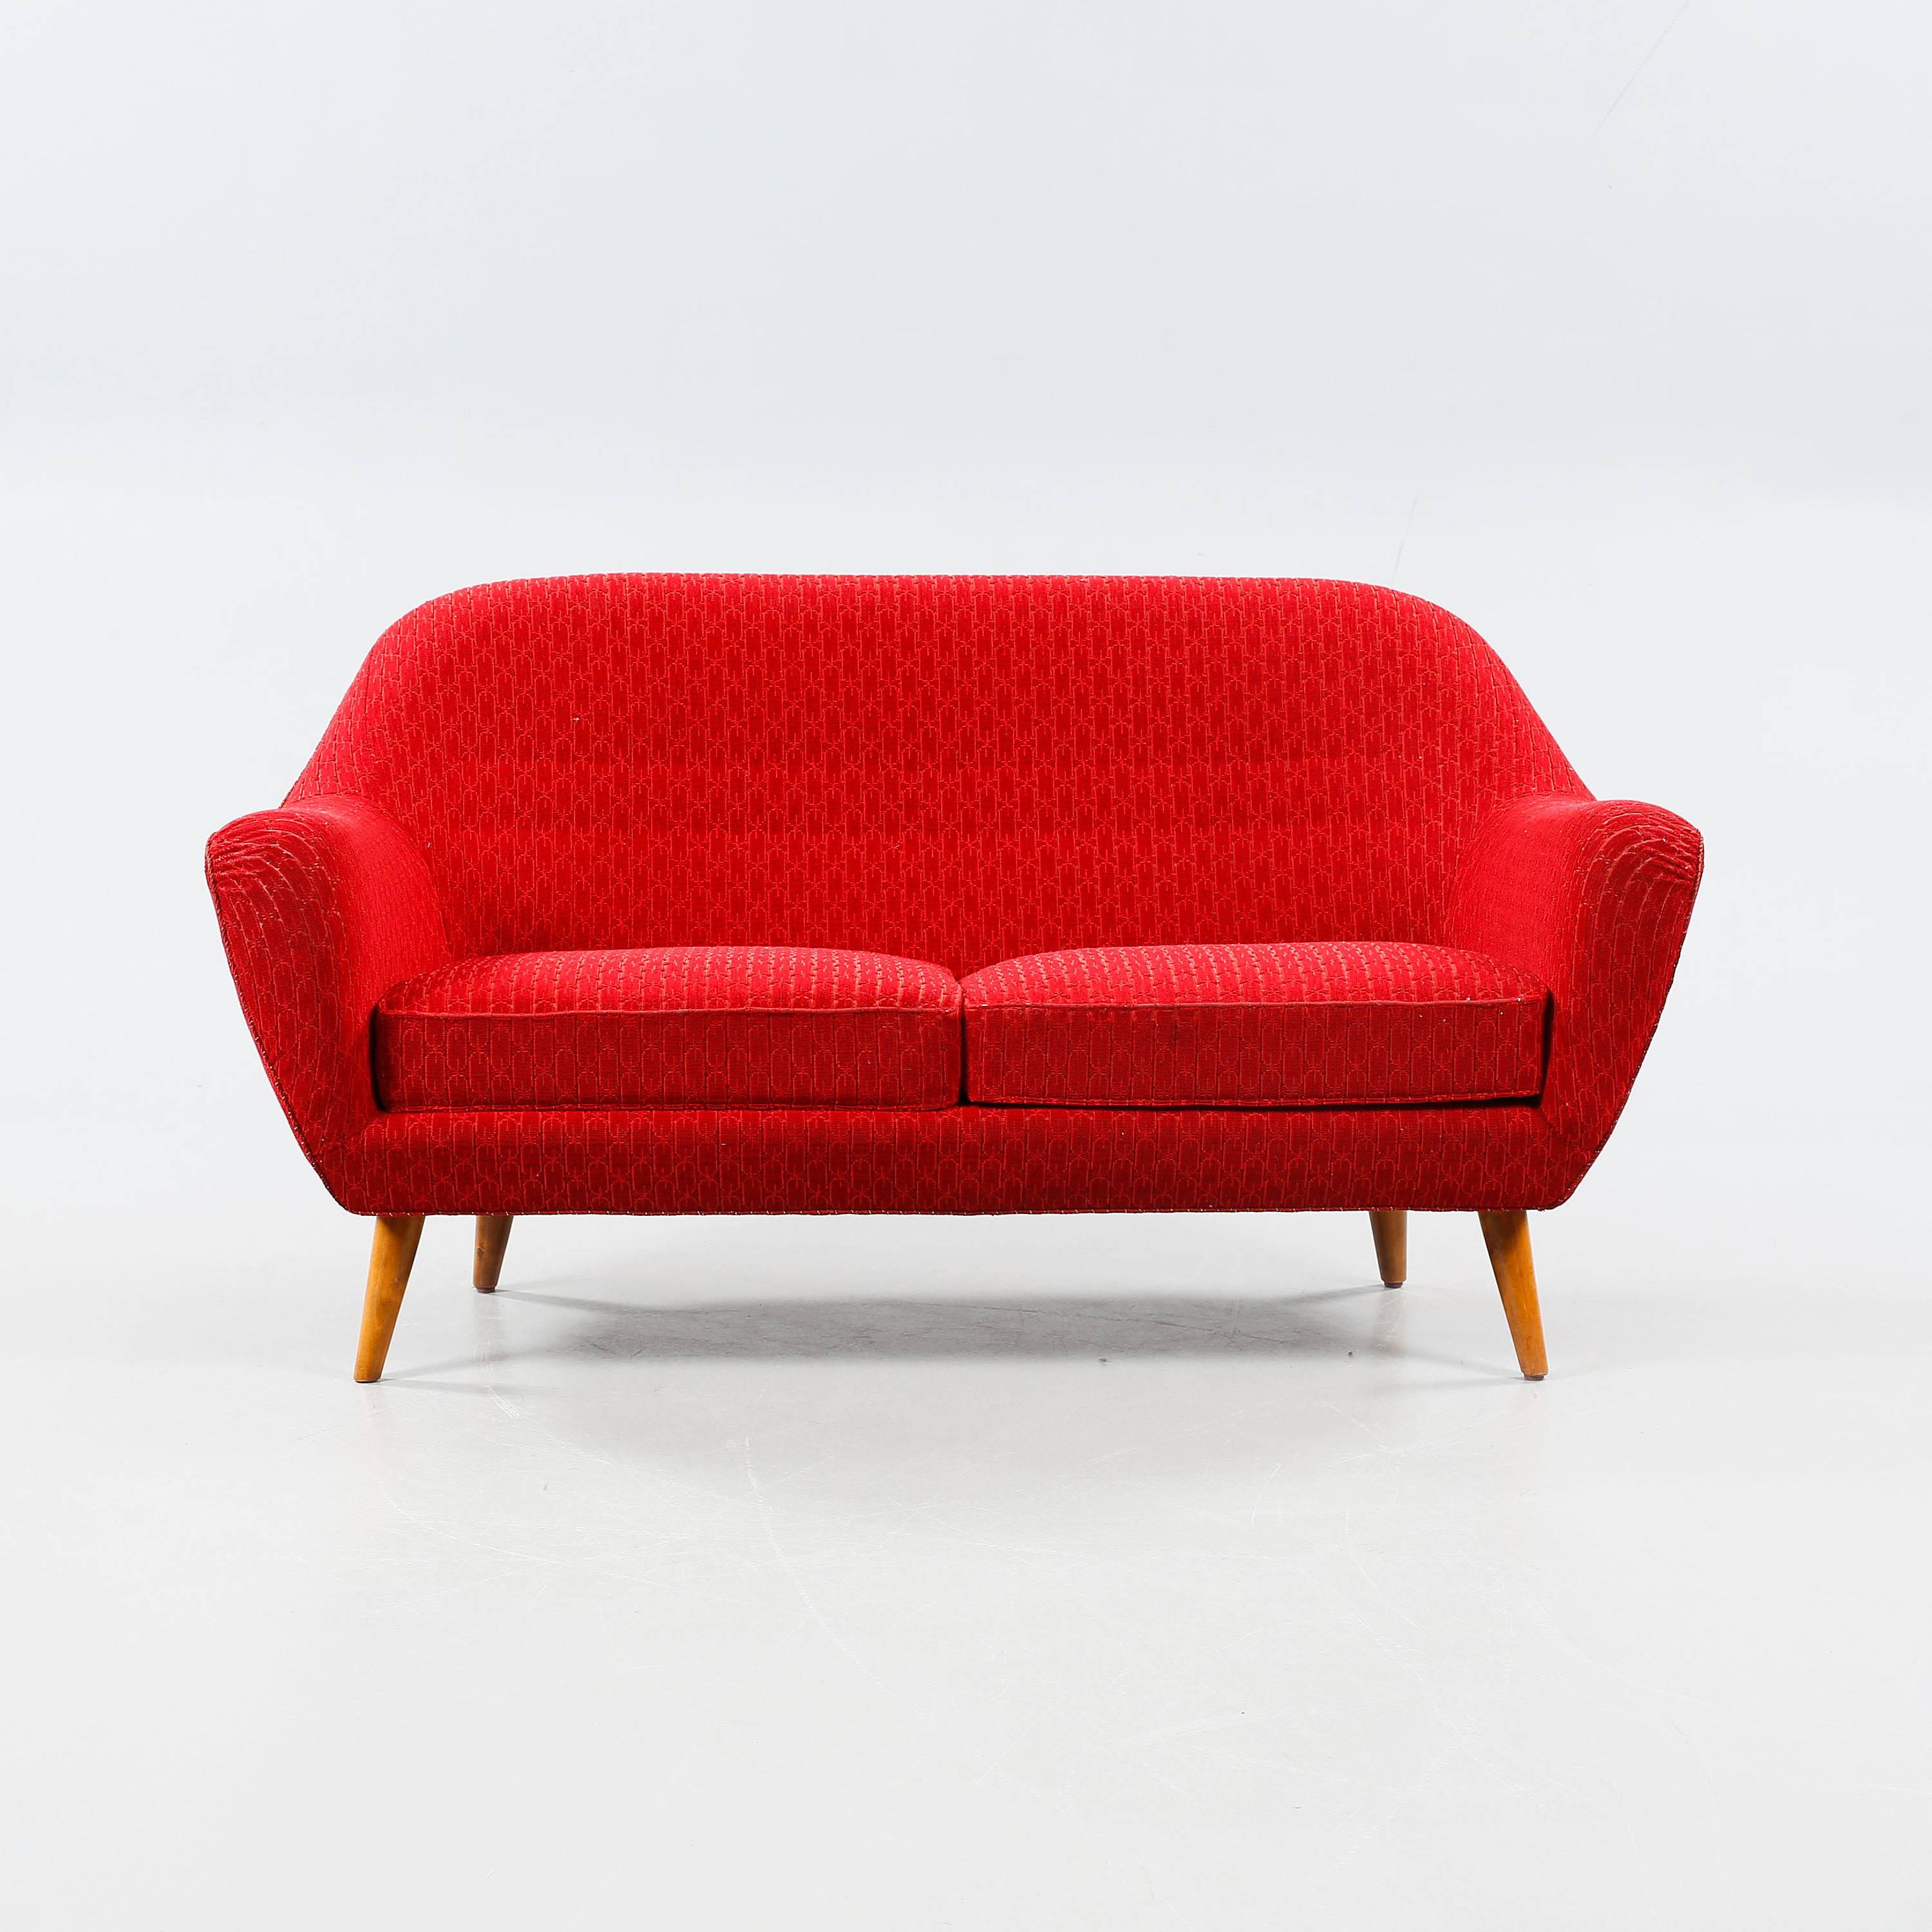 Swedish Scandinavian Modern Sofa by Svante Skogh for Klings Moble